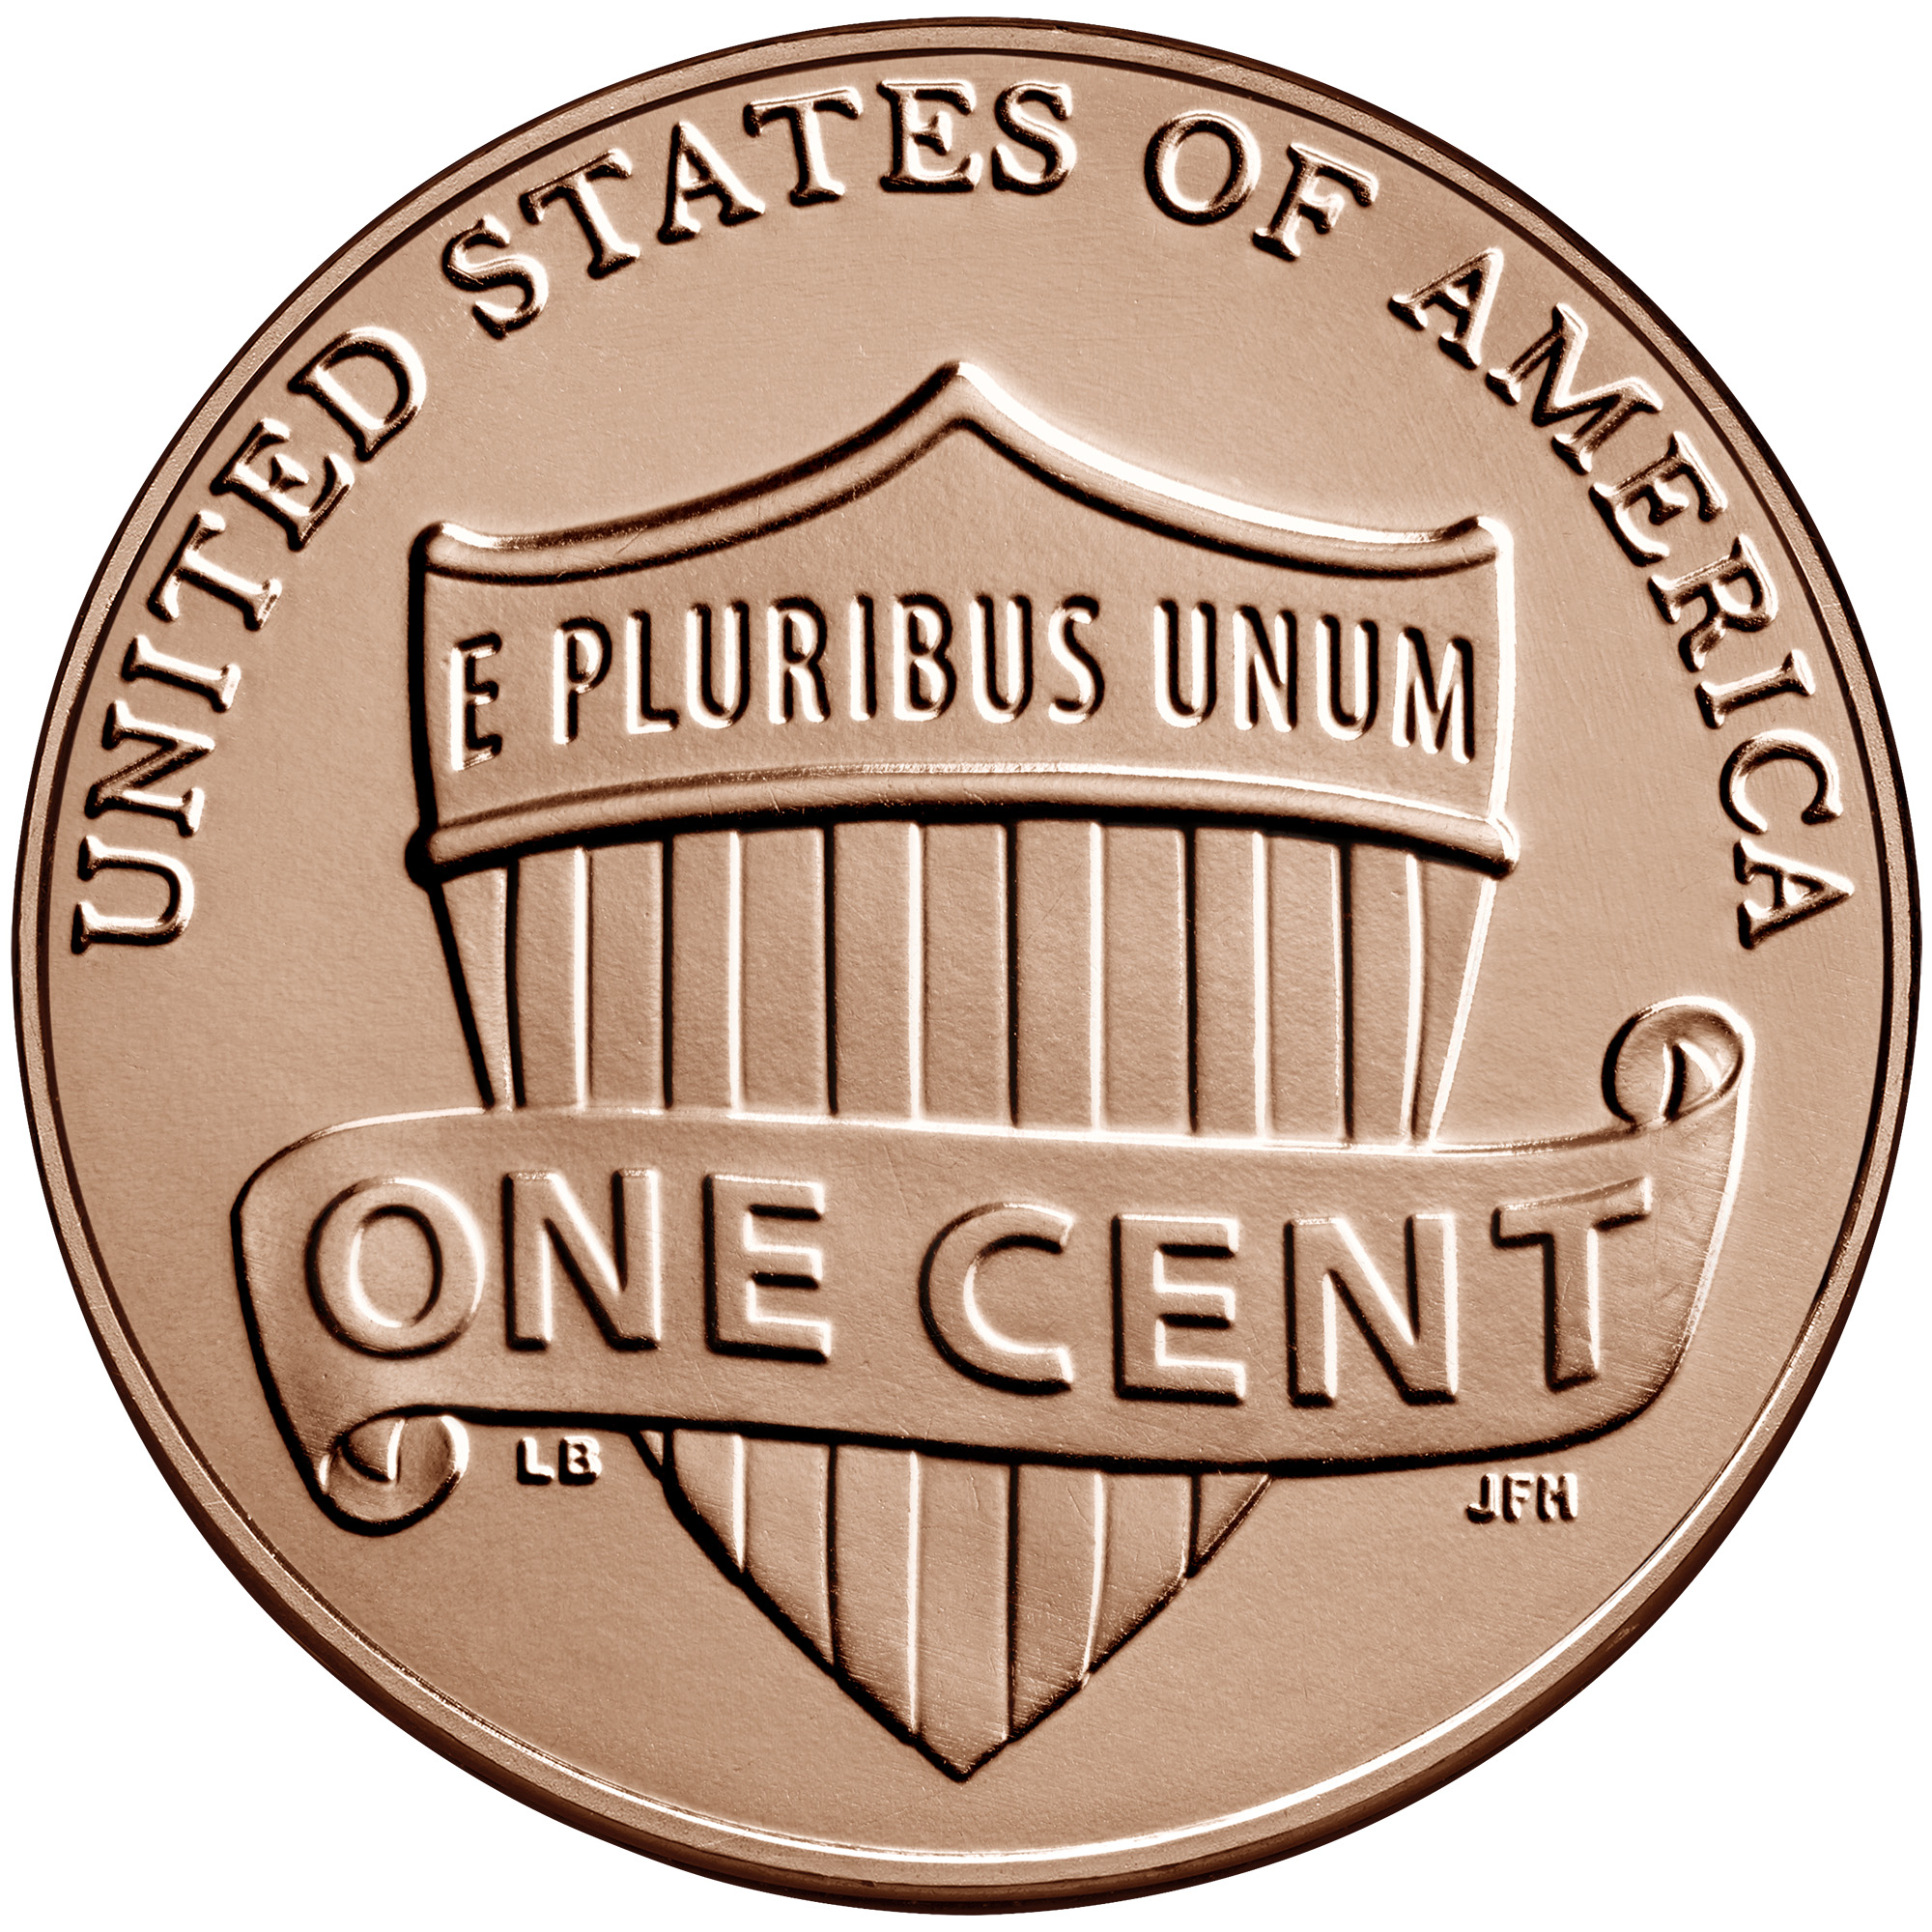 US 1 Cent - Penny 2020 no mintmark